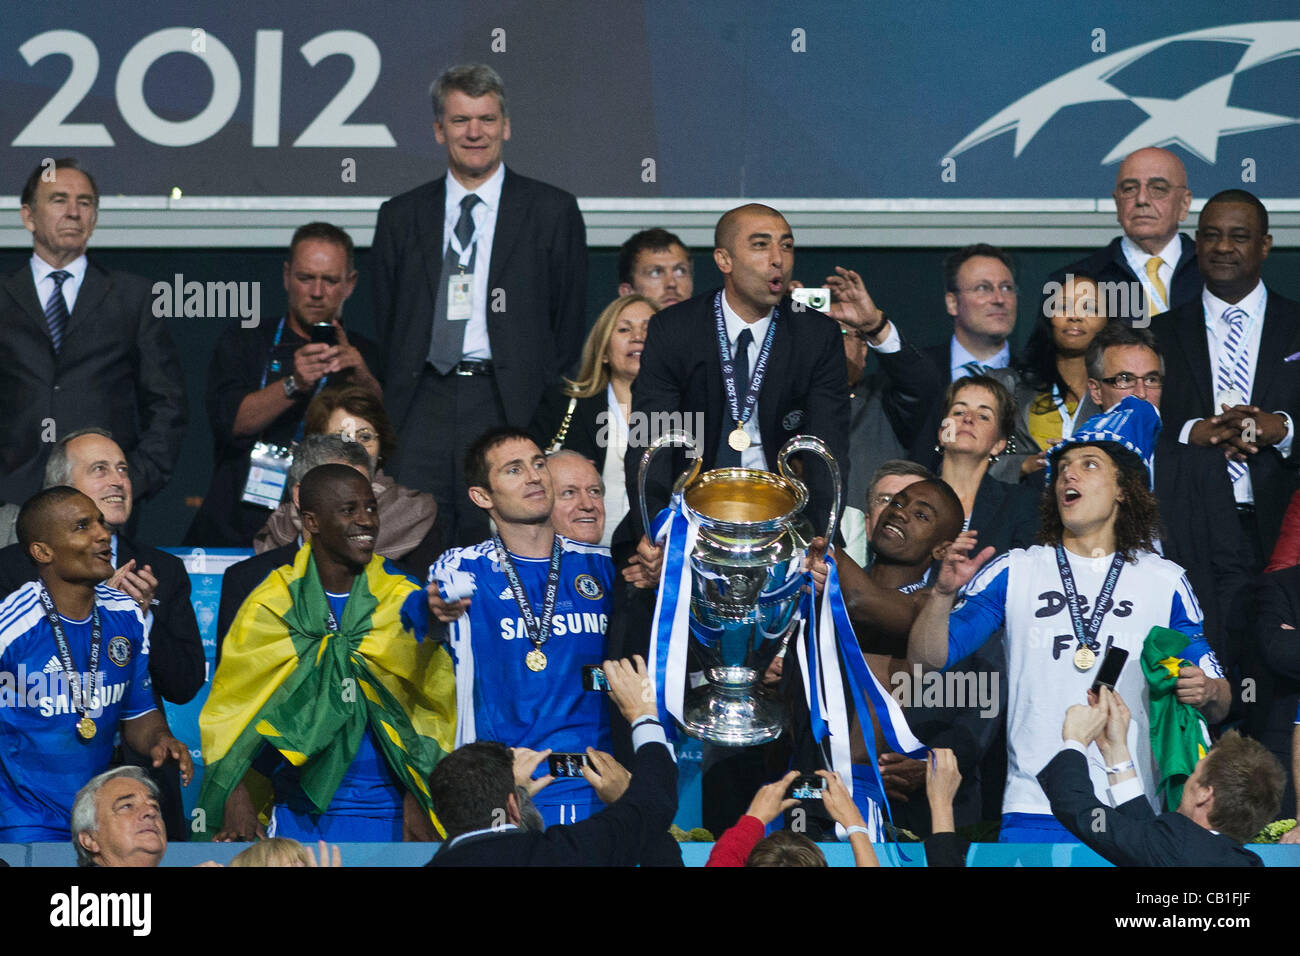 Roberto Di Matteo Coach (Chelsea), MAY 19, 2012 - Football / Soccer Stock  Photo - Alamy